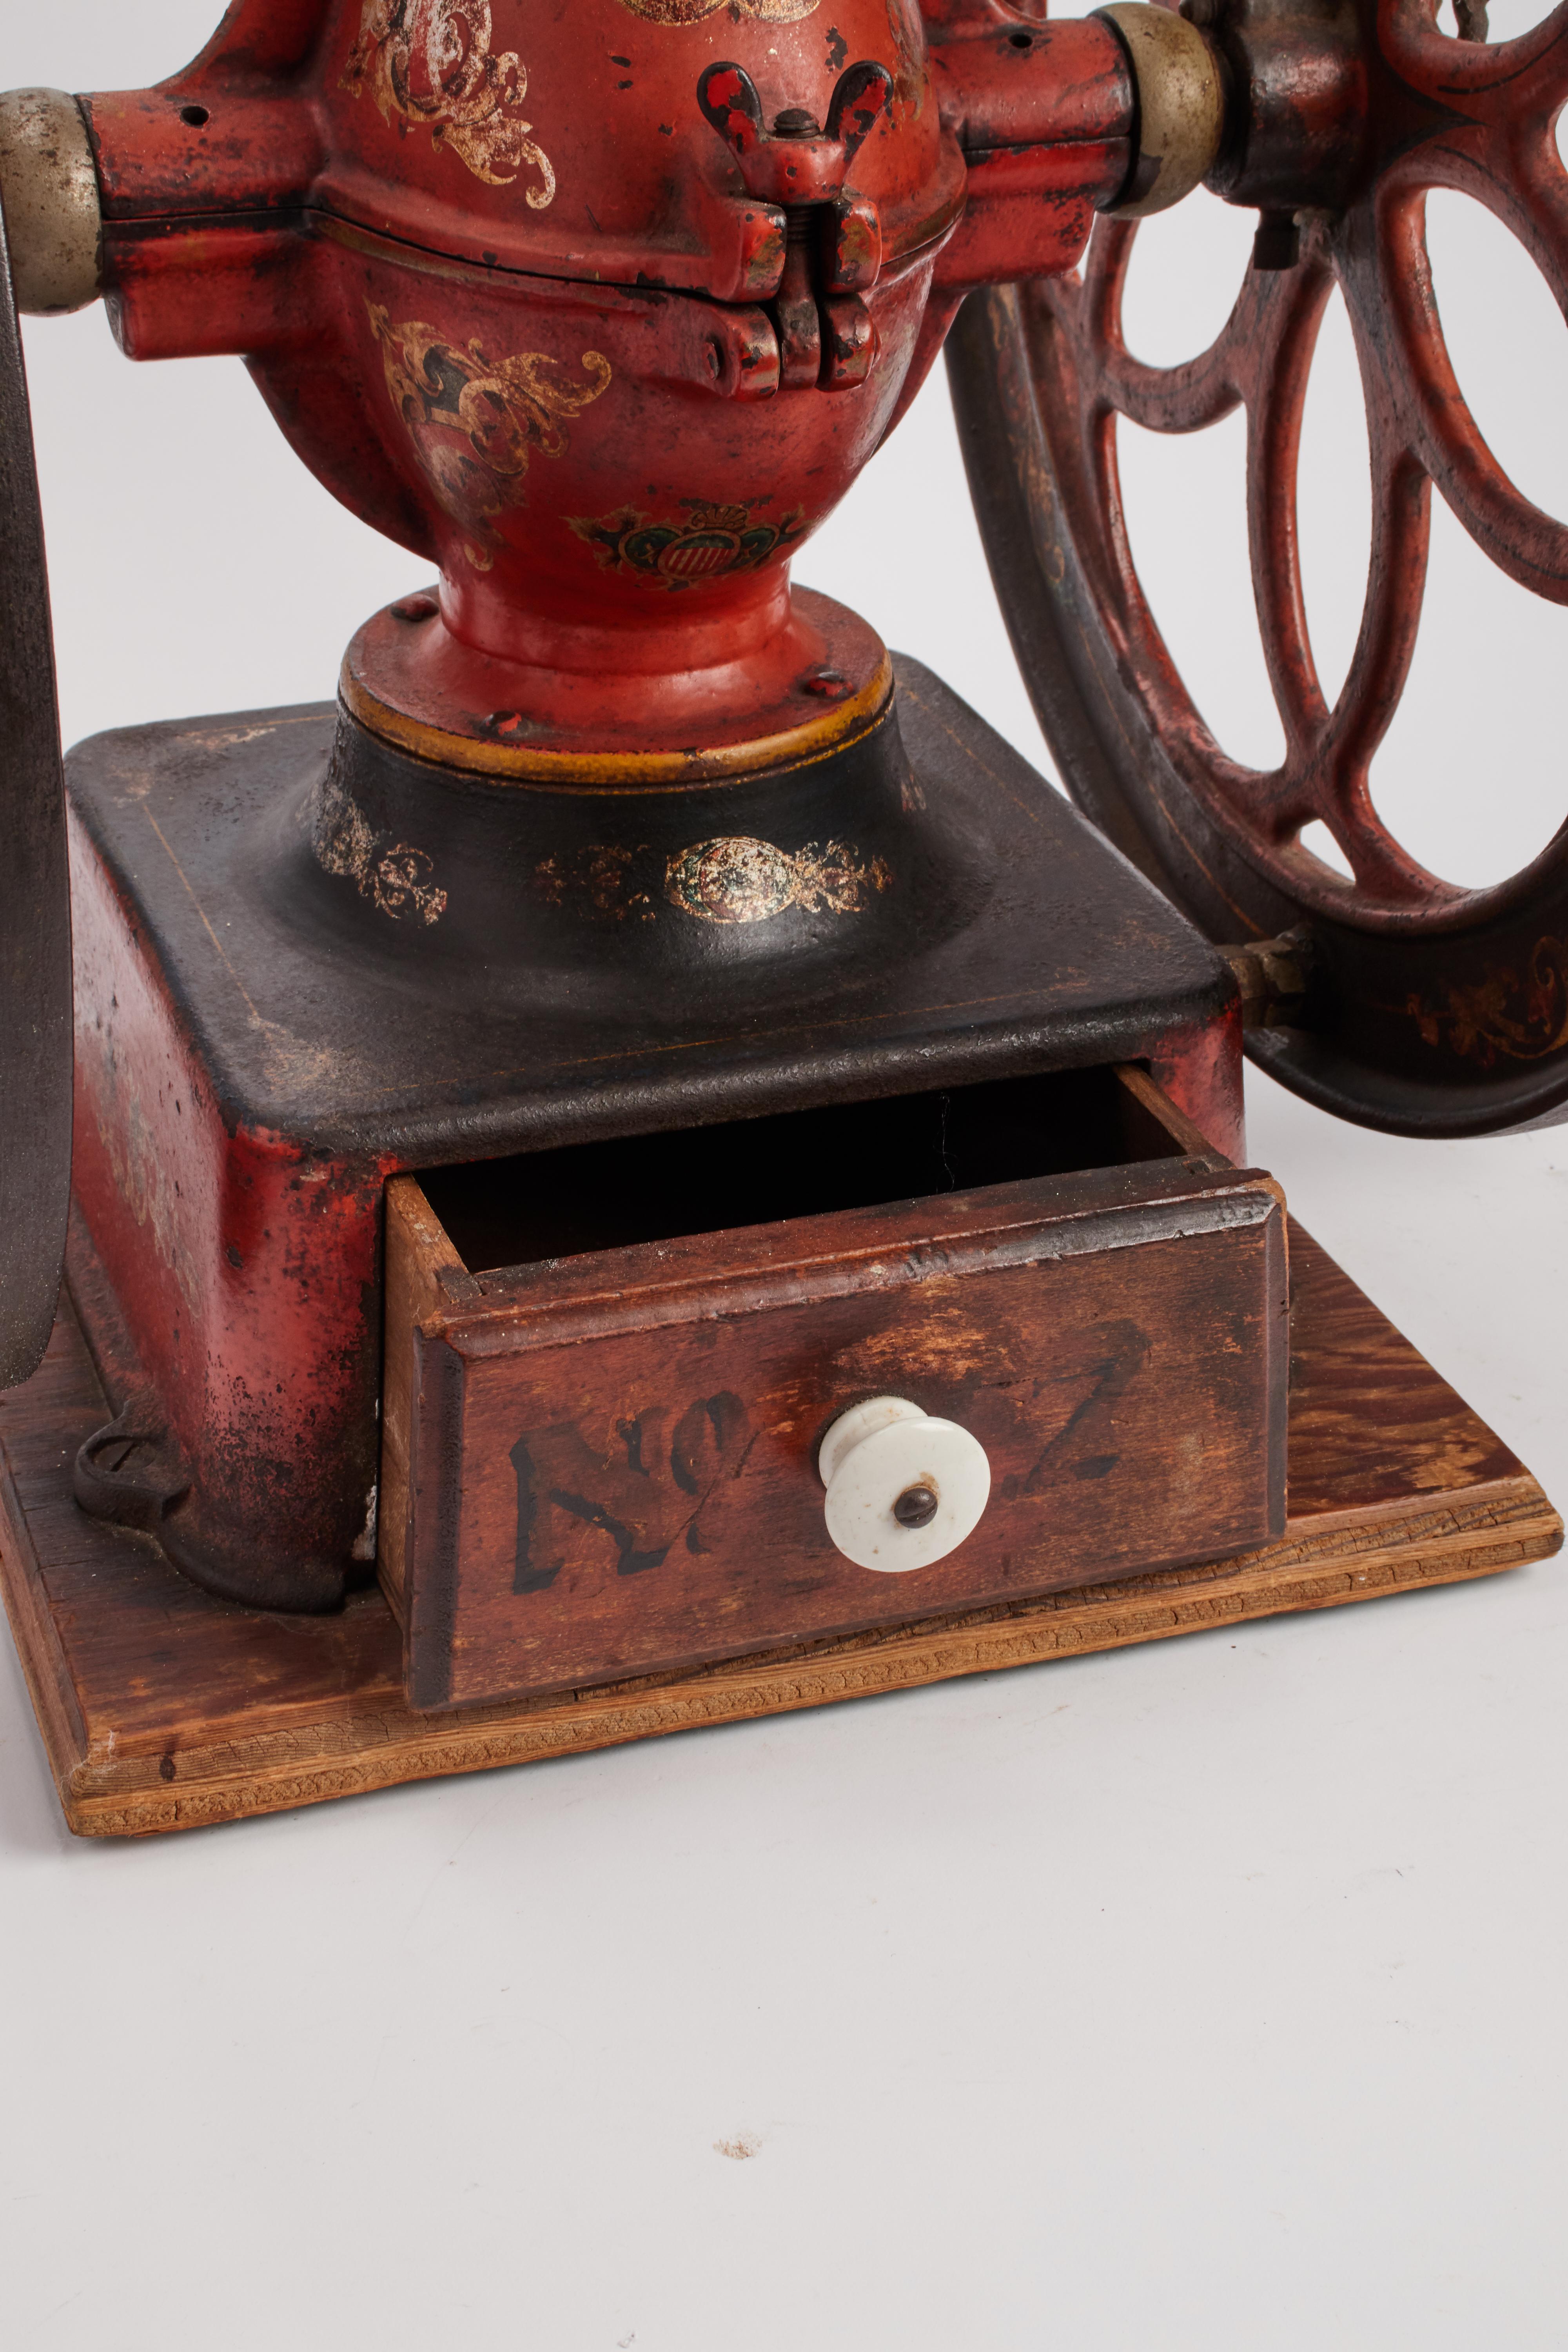 American Big Coffee Grinder for a Coffee Roasting Desk, Philadelphia, 1880